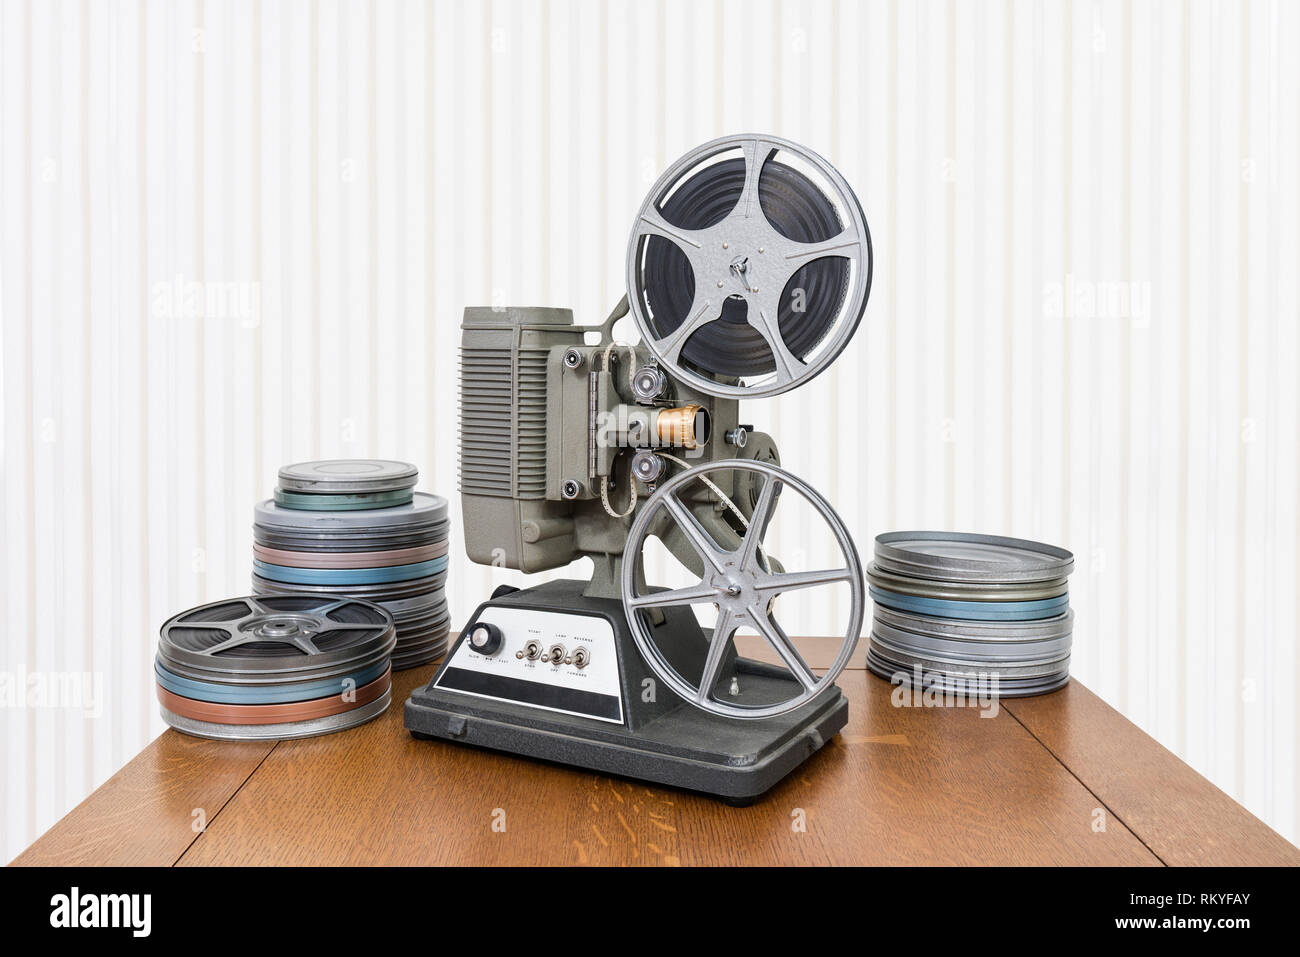 https://c8.alamy.com/comp/RKYFAY/vintage-8mm-home-movie-projector-and-film-cans-on-wood-table-RKYFAY.jpg